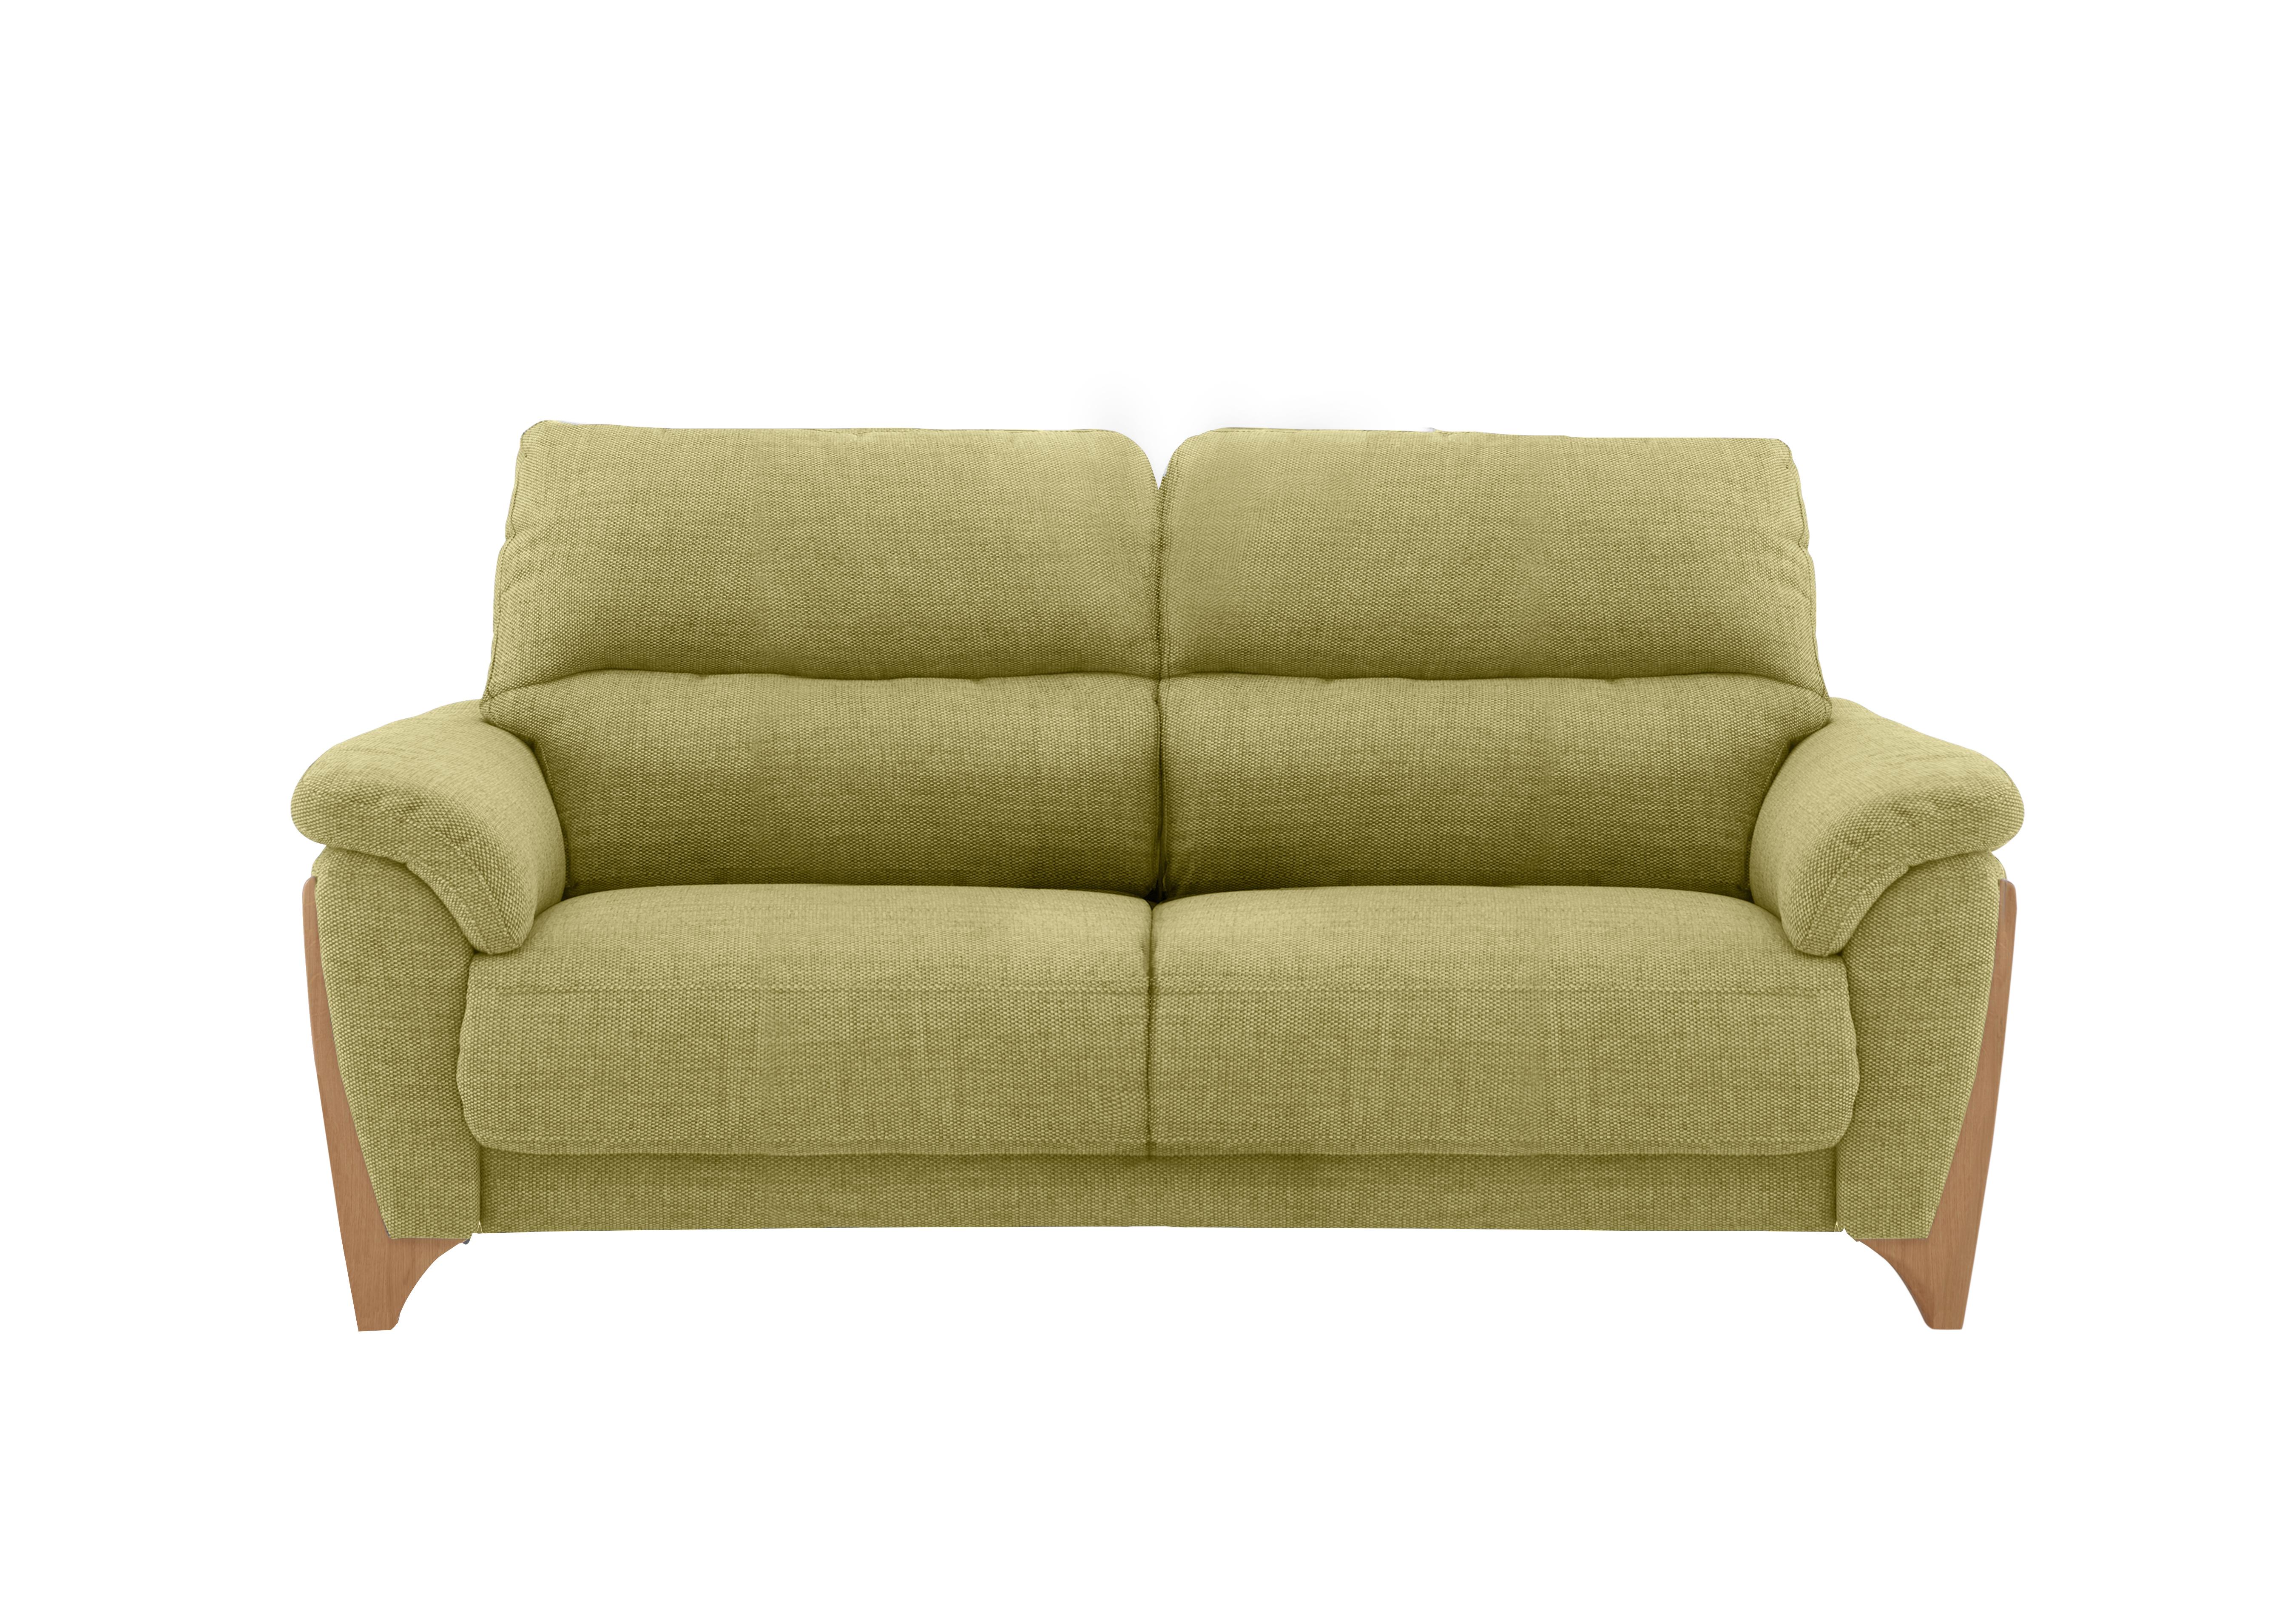 Enna Large Fabric Sofa in P220 on Furniture Village